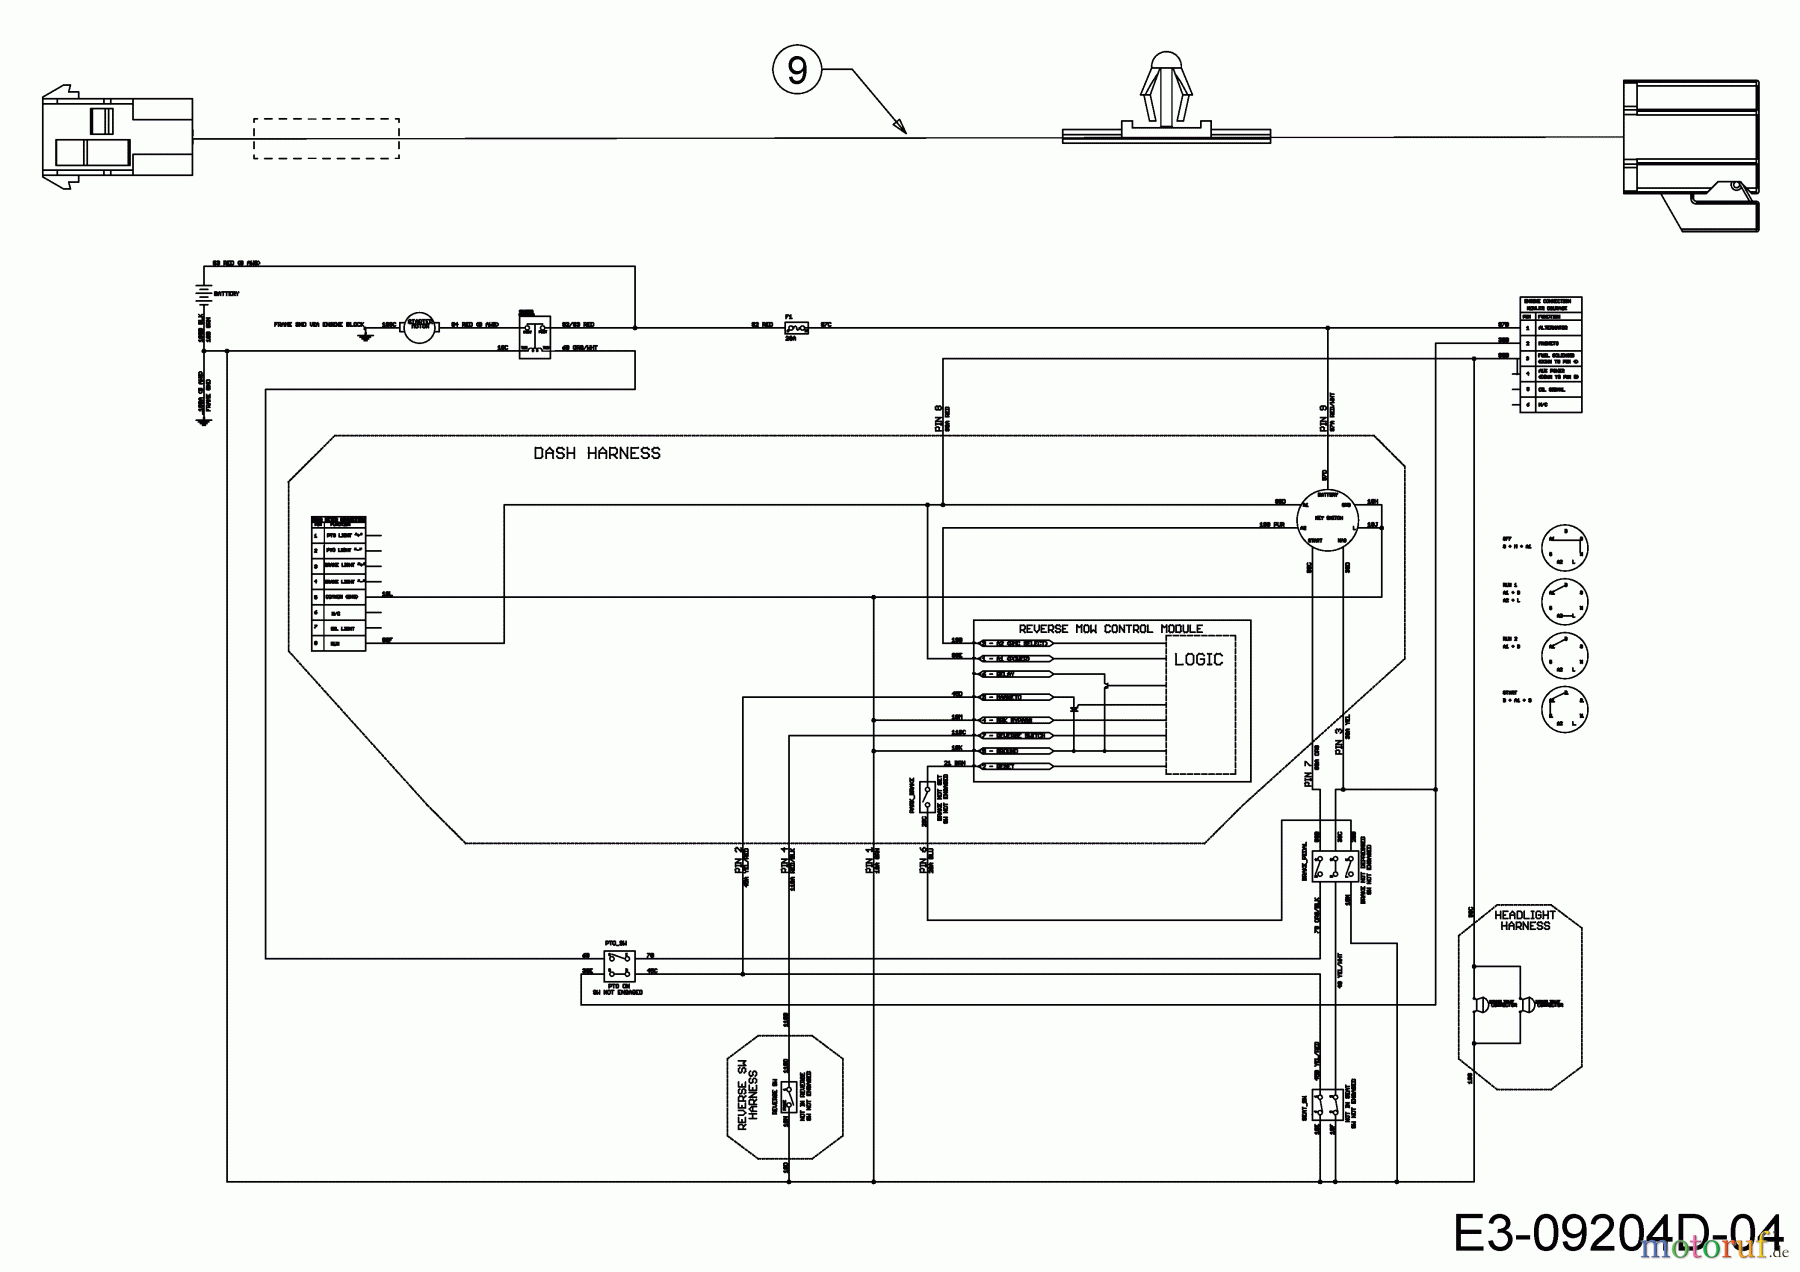  Troy-Bilt Garden tractors Super Bronco GT 54 FAB 14A7A3KA066  (2018) Wiring diagram reverse